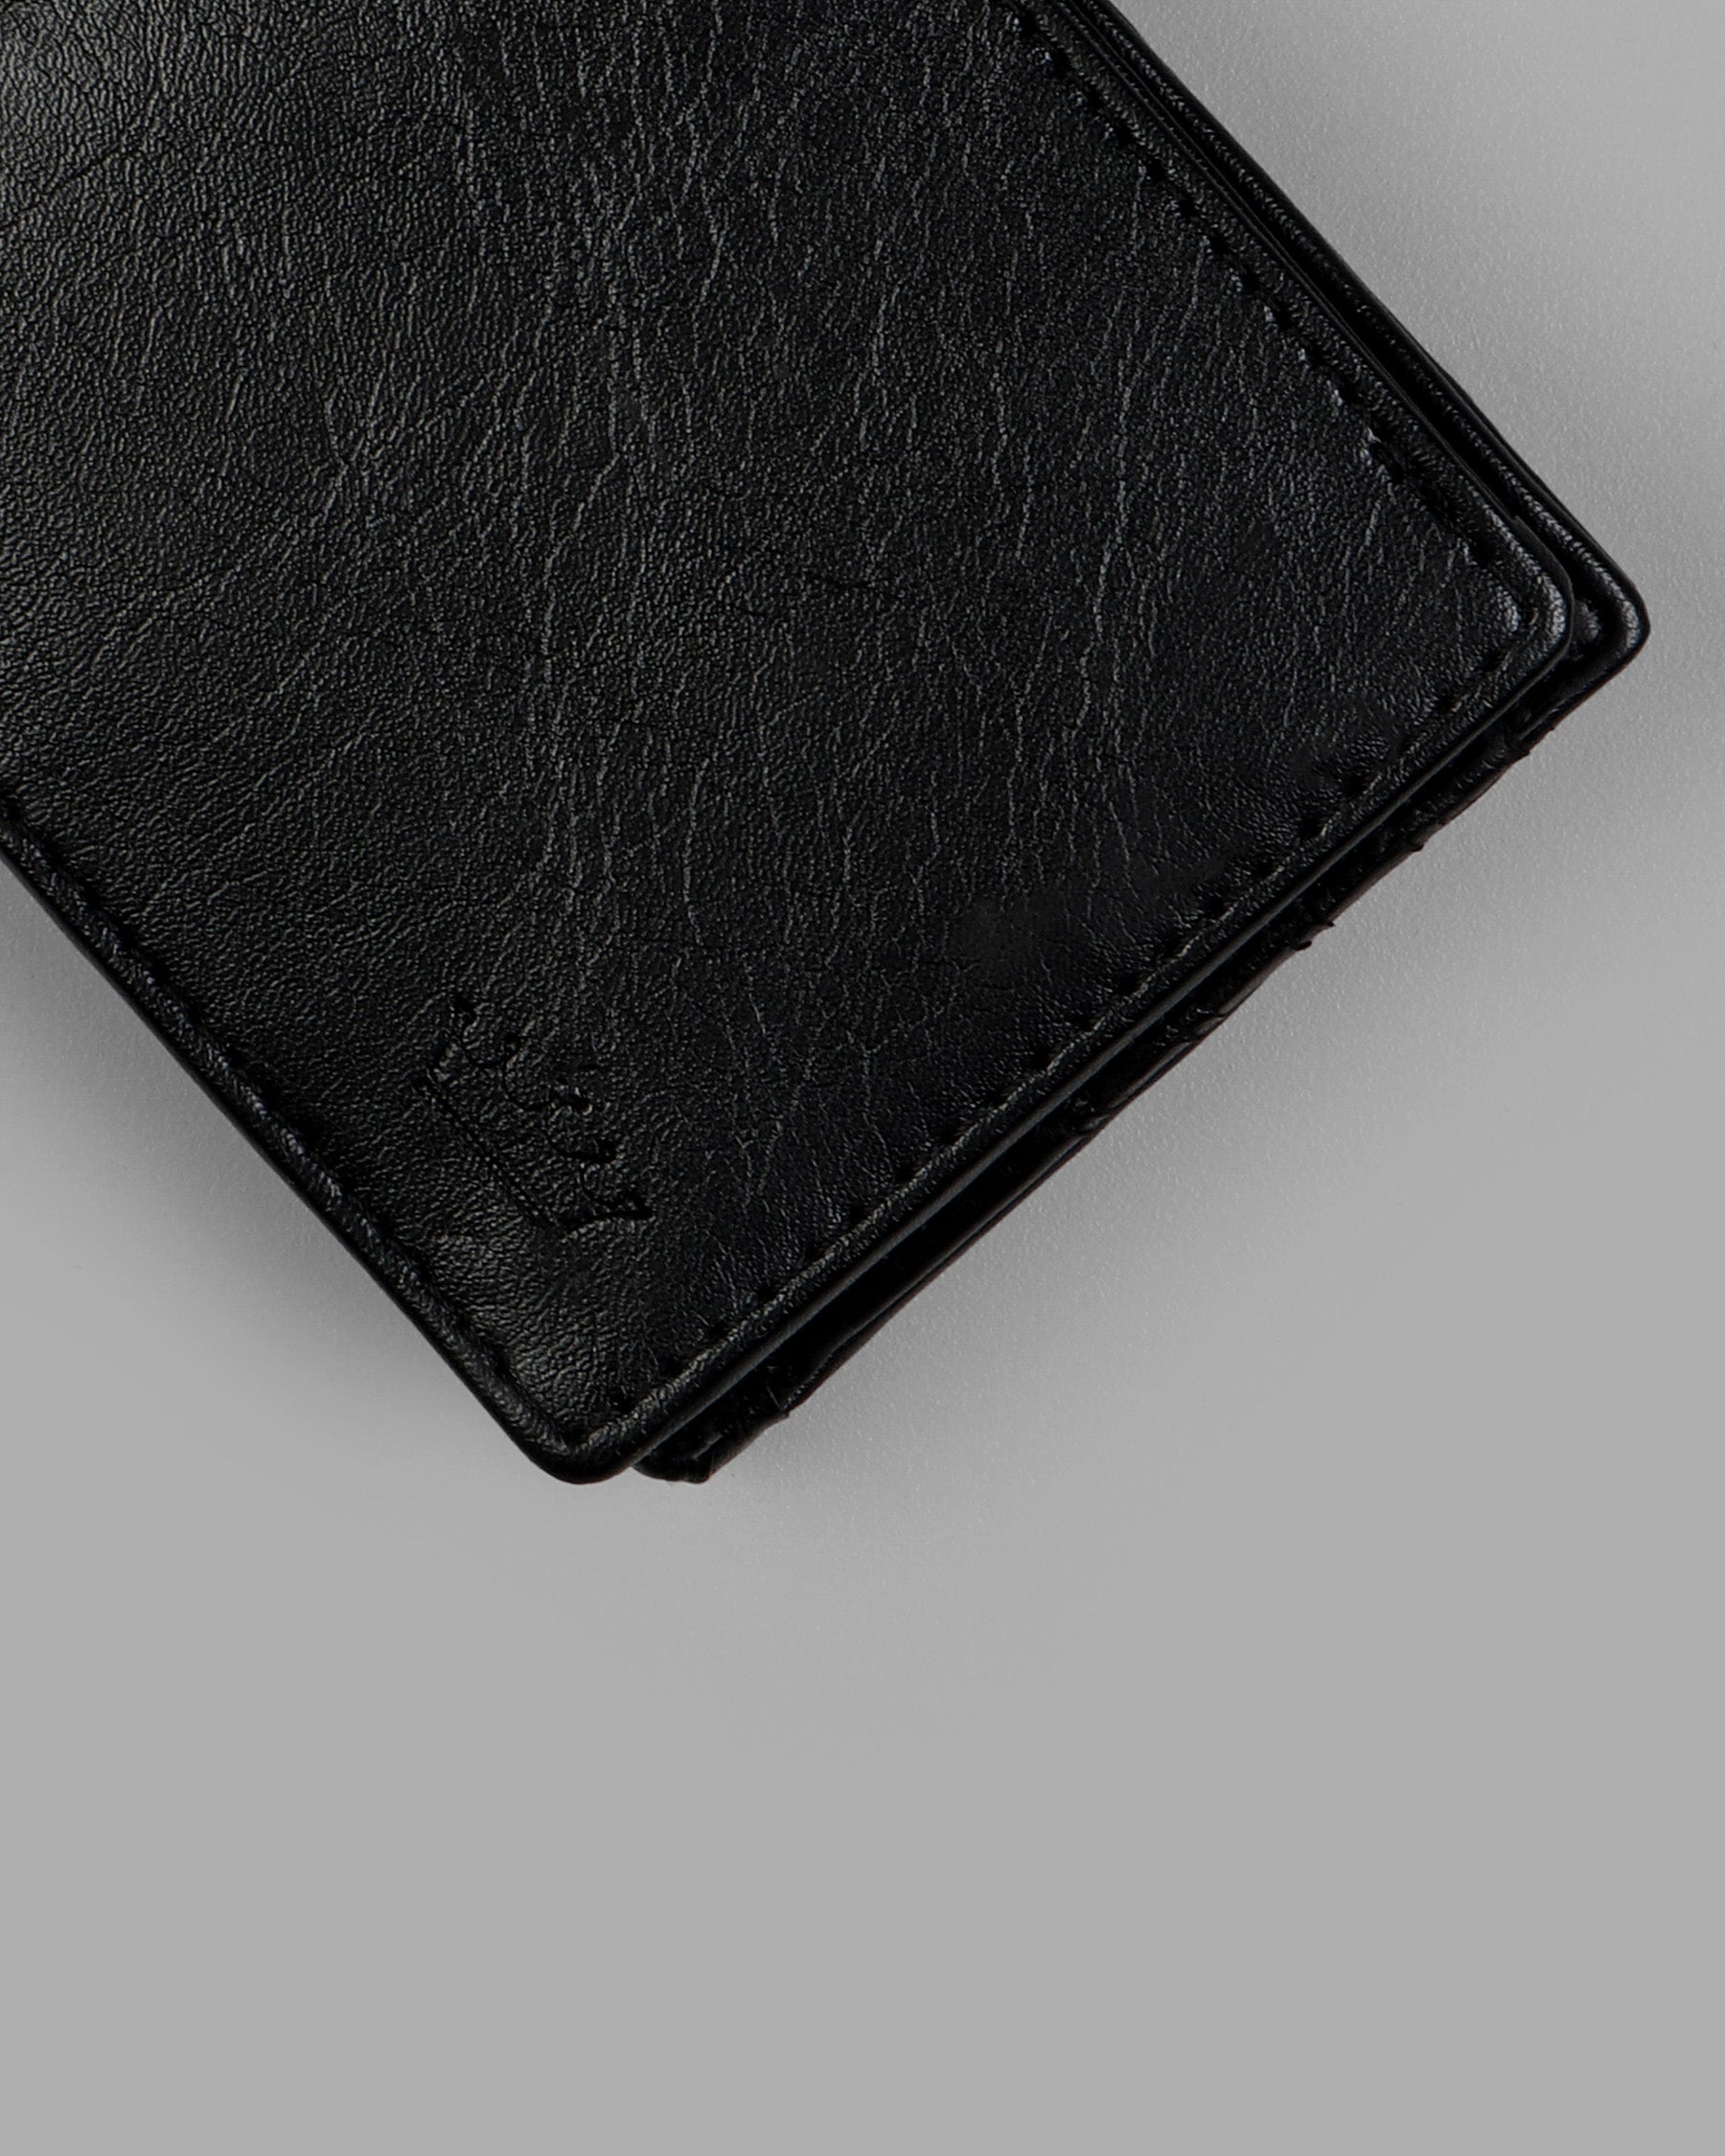 Black Vegan Leather 18 Card Holders Handcrafted Wallet WT11